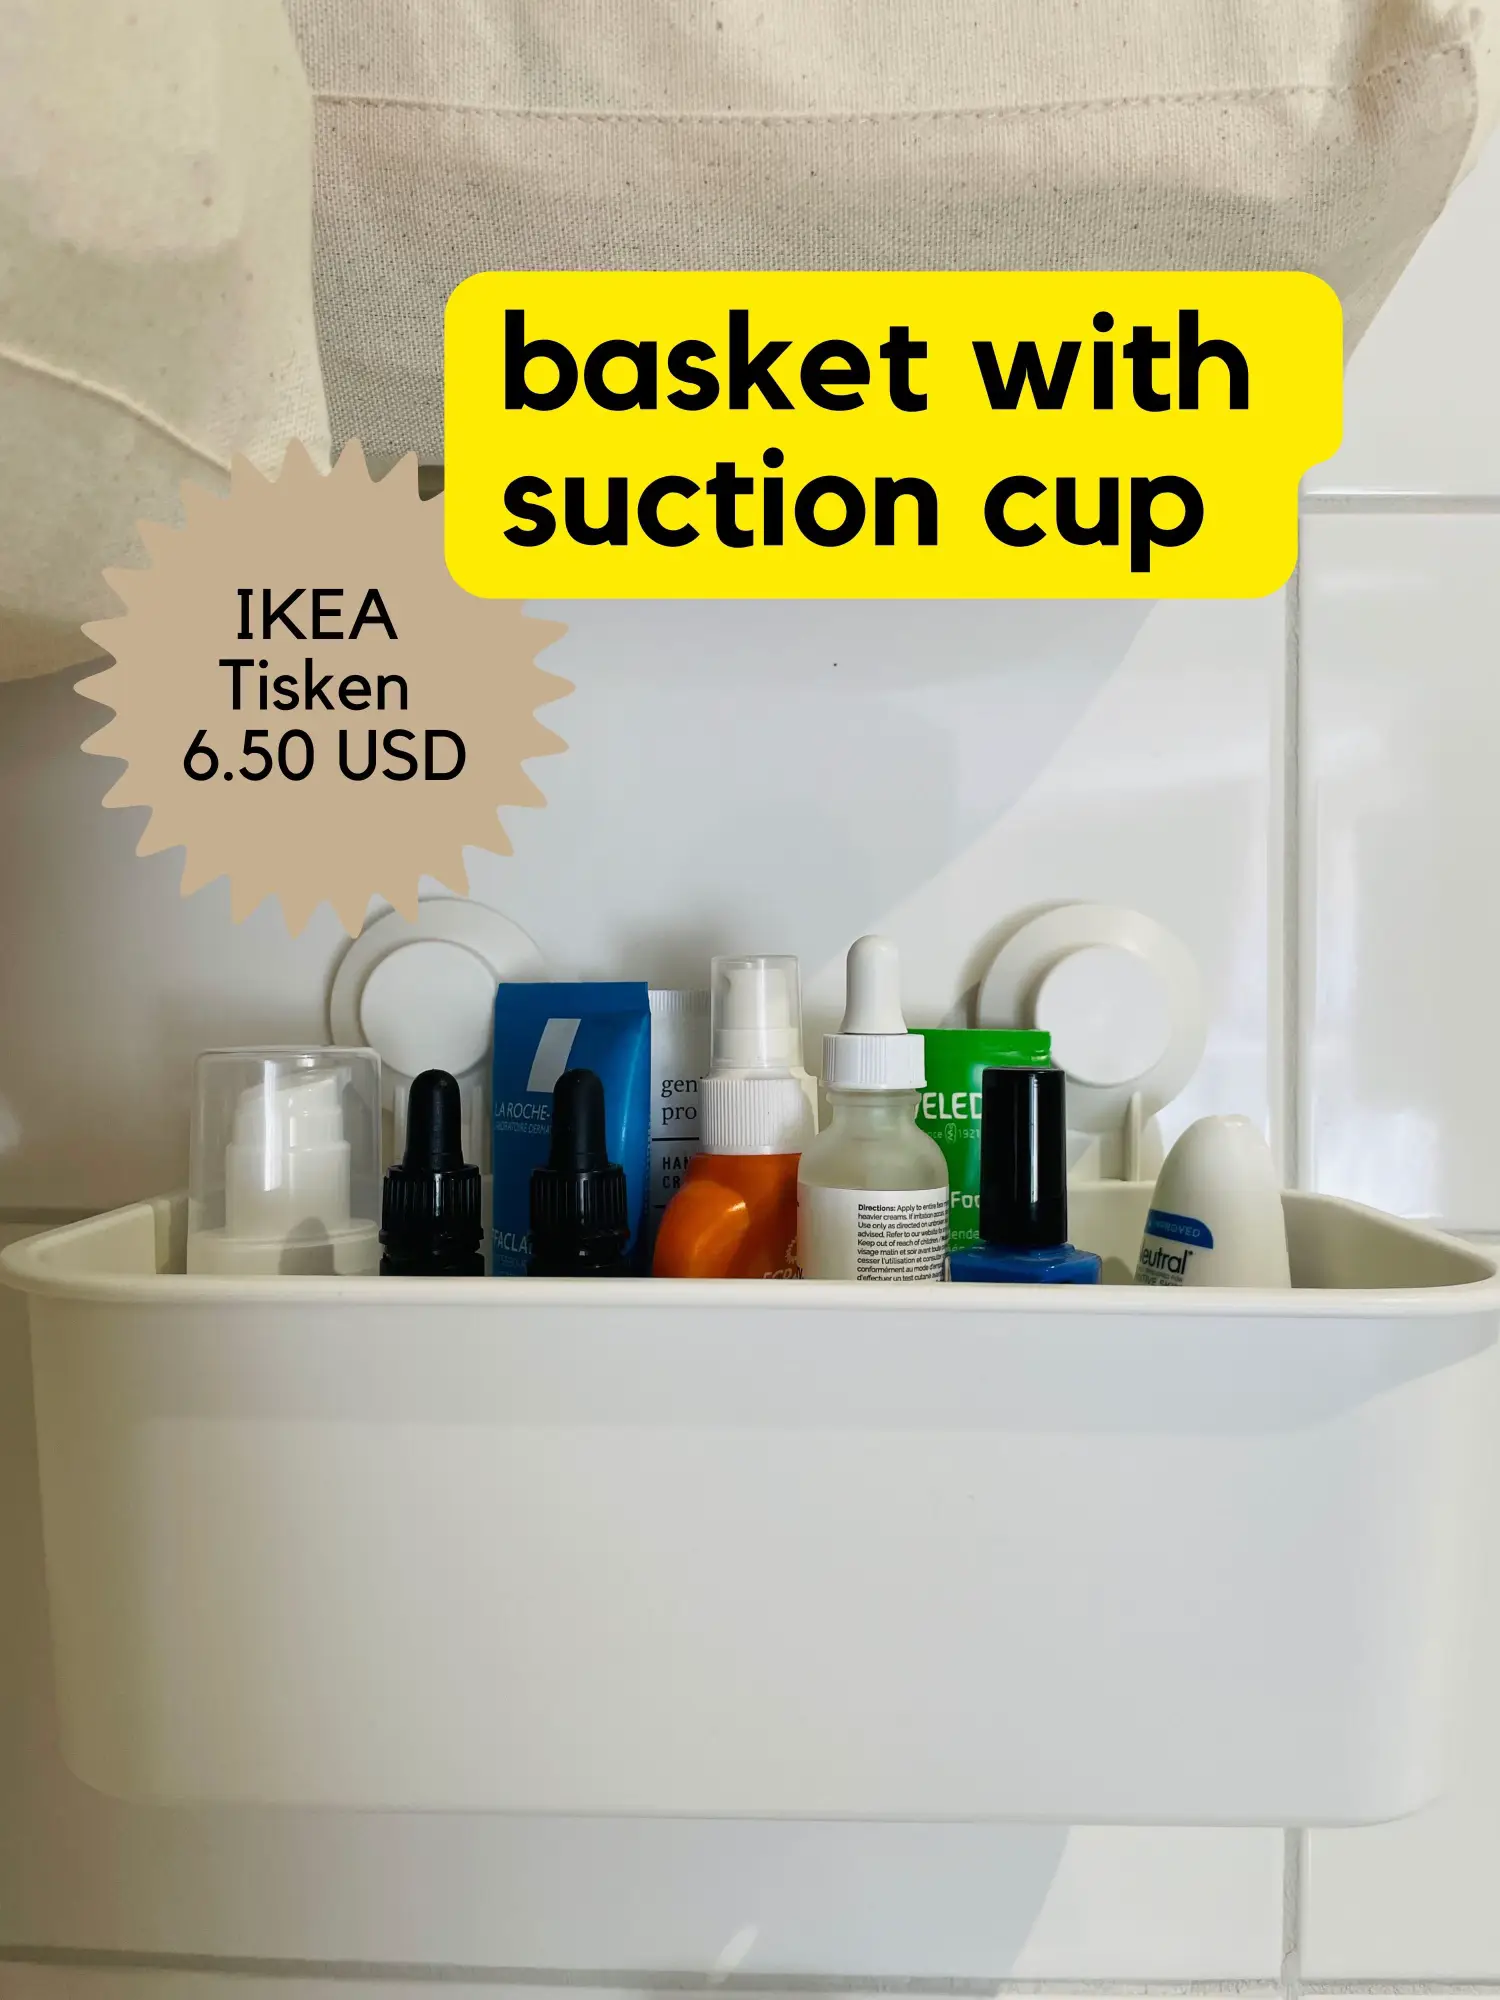 Magic Suction Basket - Keep Your Shower or Bathtub Area Organized, White